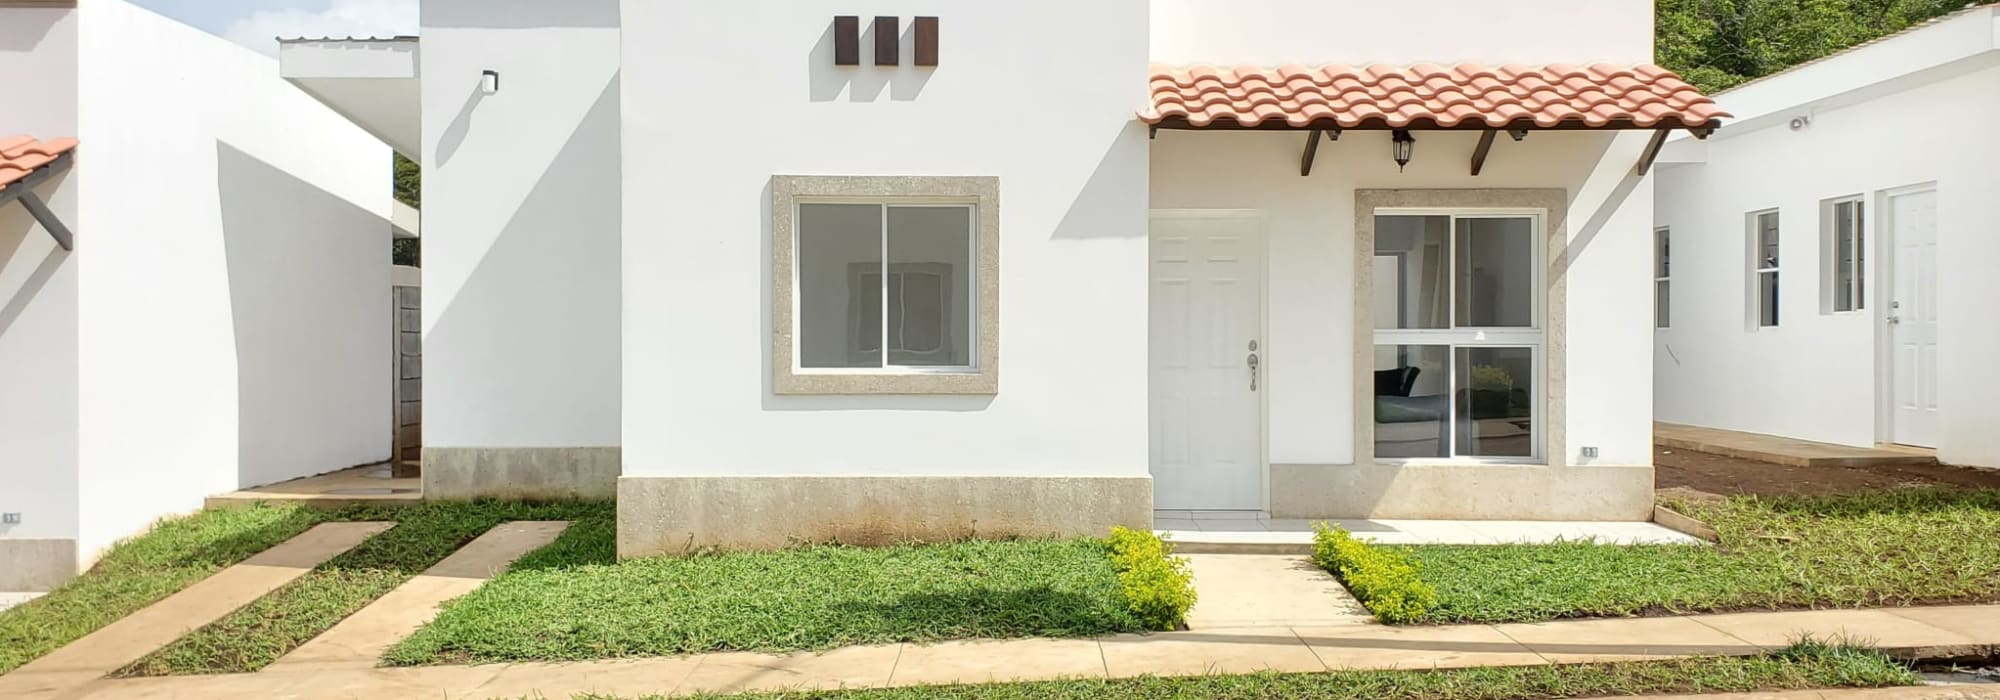 Tu Casa nueva en Jinotepe, Modelo Terracota en Residencial Camino Verde